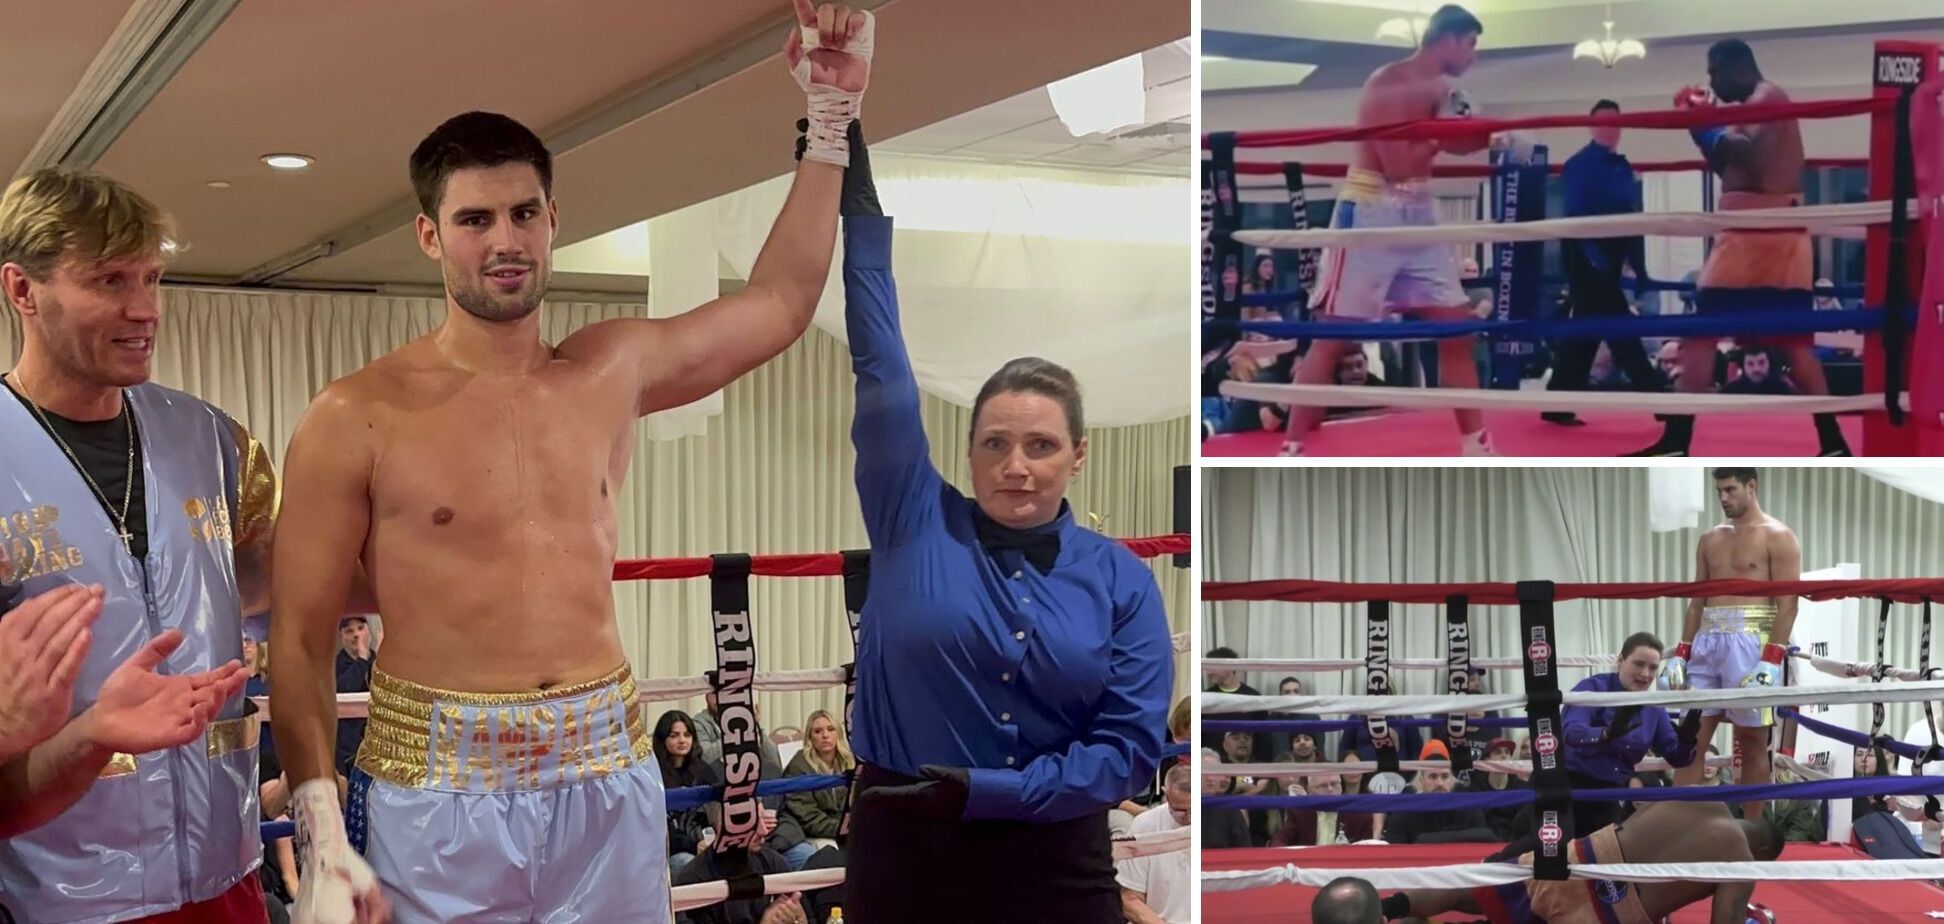 The unbeaten Ukrainian heavyweight won a rare standing knockout in the 2nd round